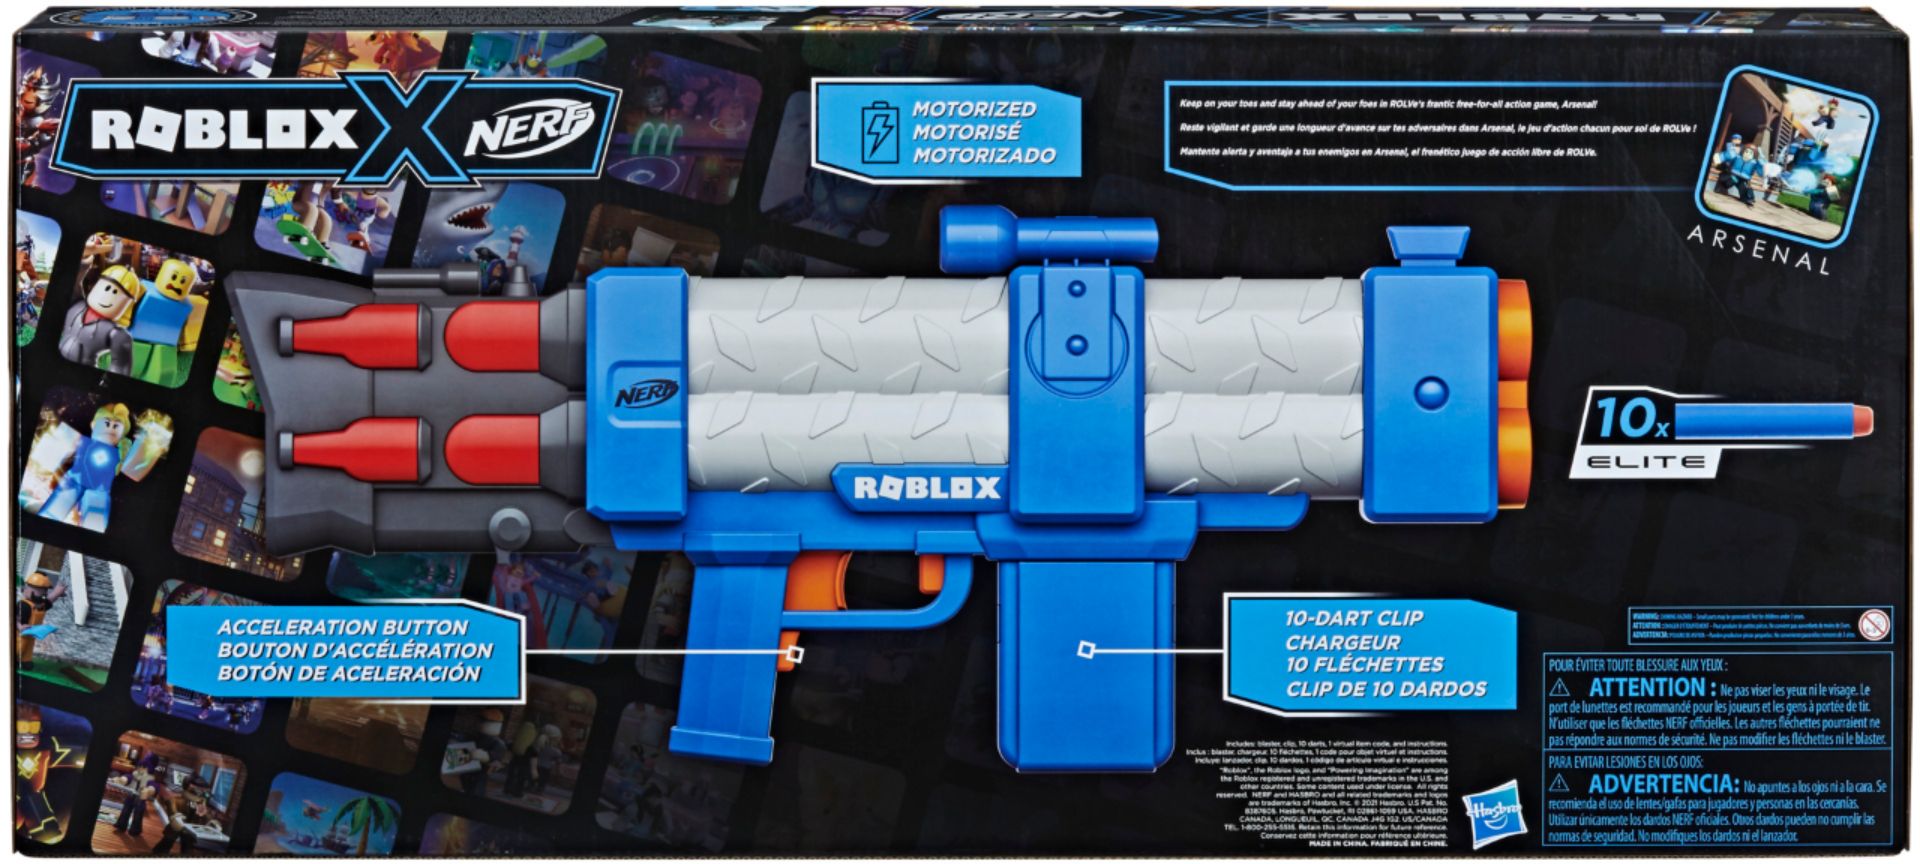 Best Buy: Nerf Roblox Arsenal: Pulse Laser Blaster F2484